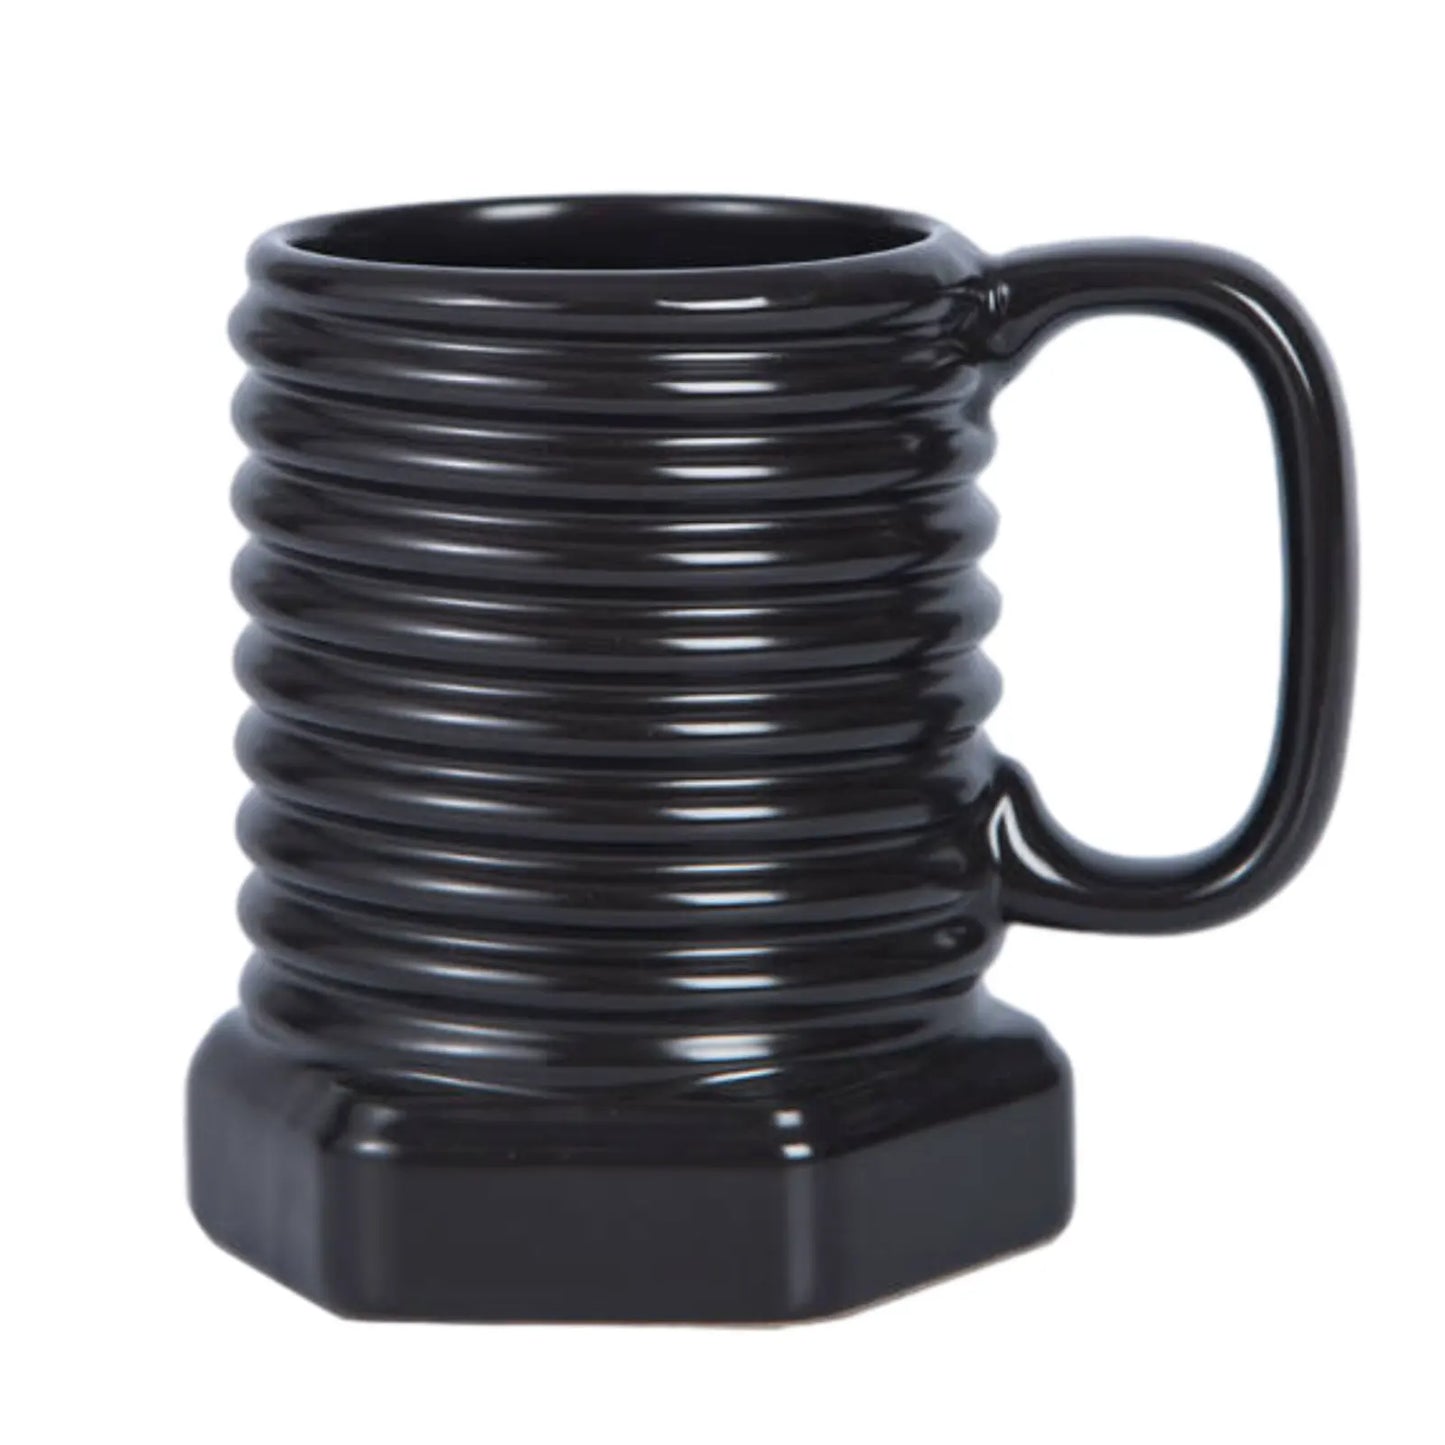 Screw Shape Ceramic Coffee Mug Creative Milk Tea Cup for Home Office Breakfast Milk Water Drinking Cup Gift for Men Women